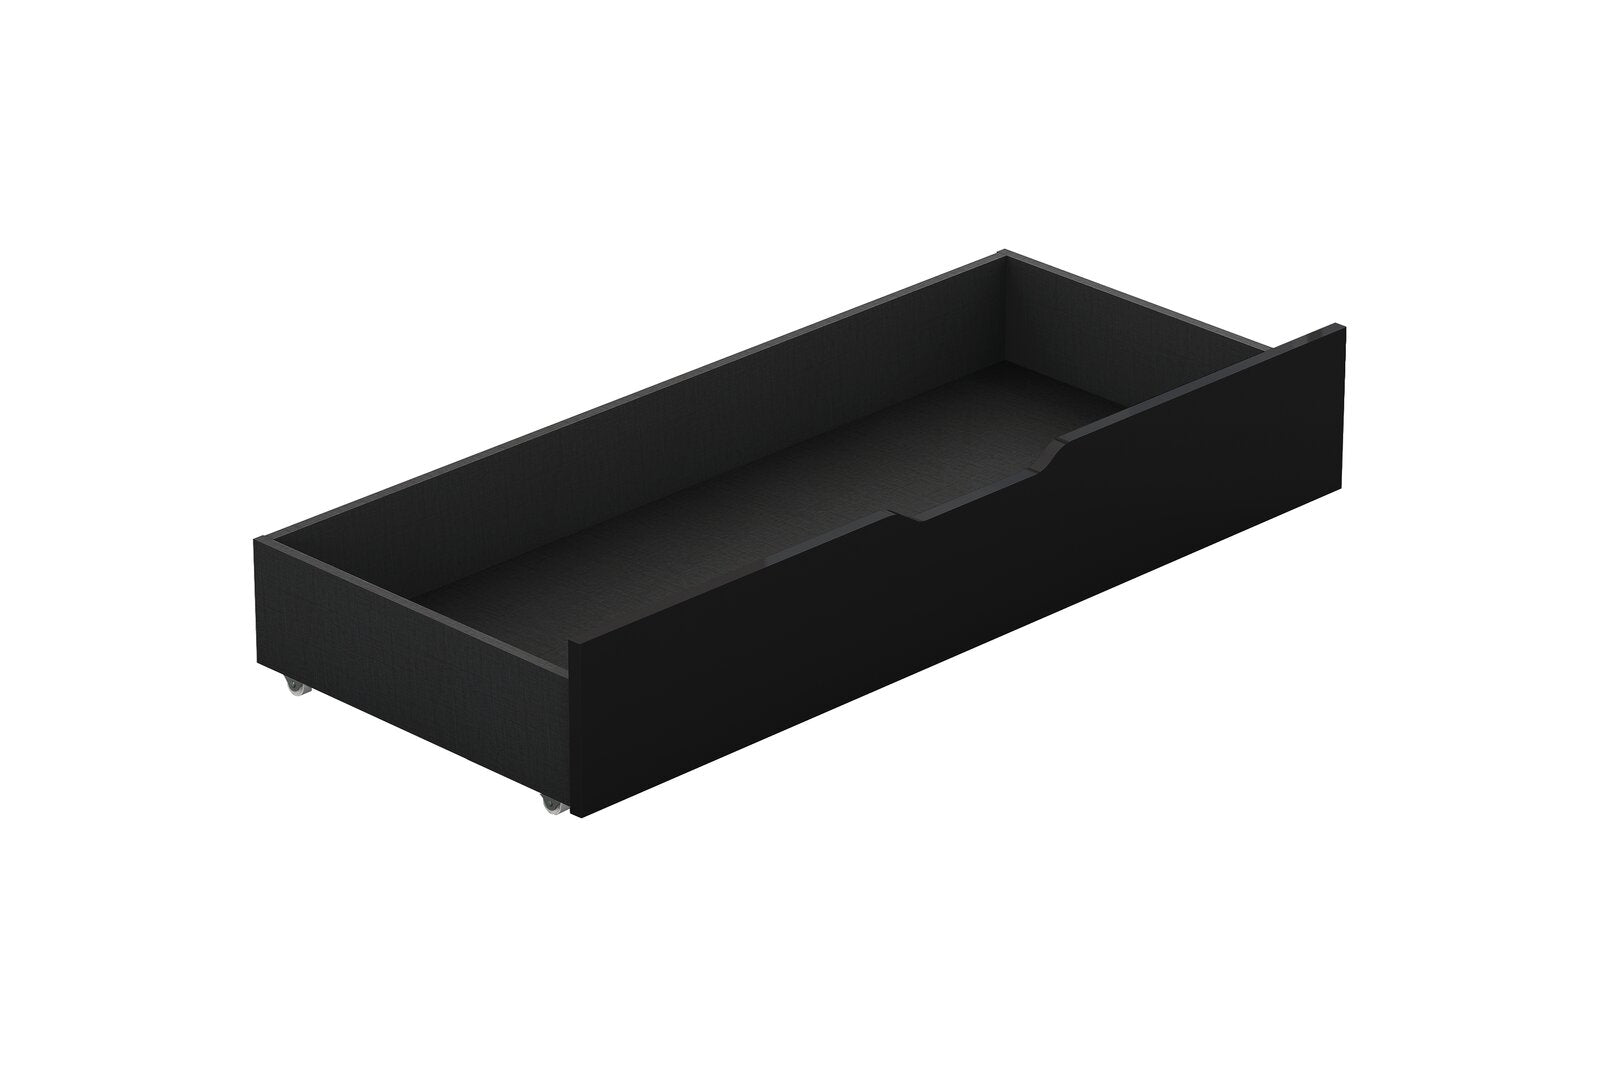 Jayda Storage Platform Bed (2 Boxes) see description for pieces included K7606